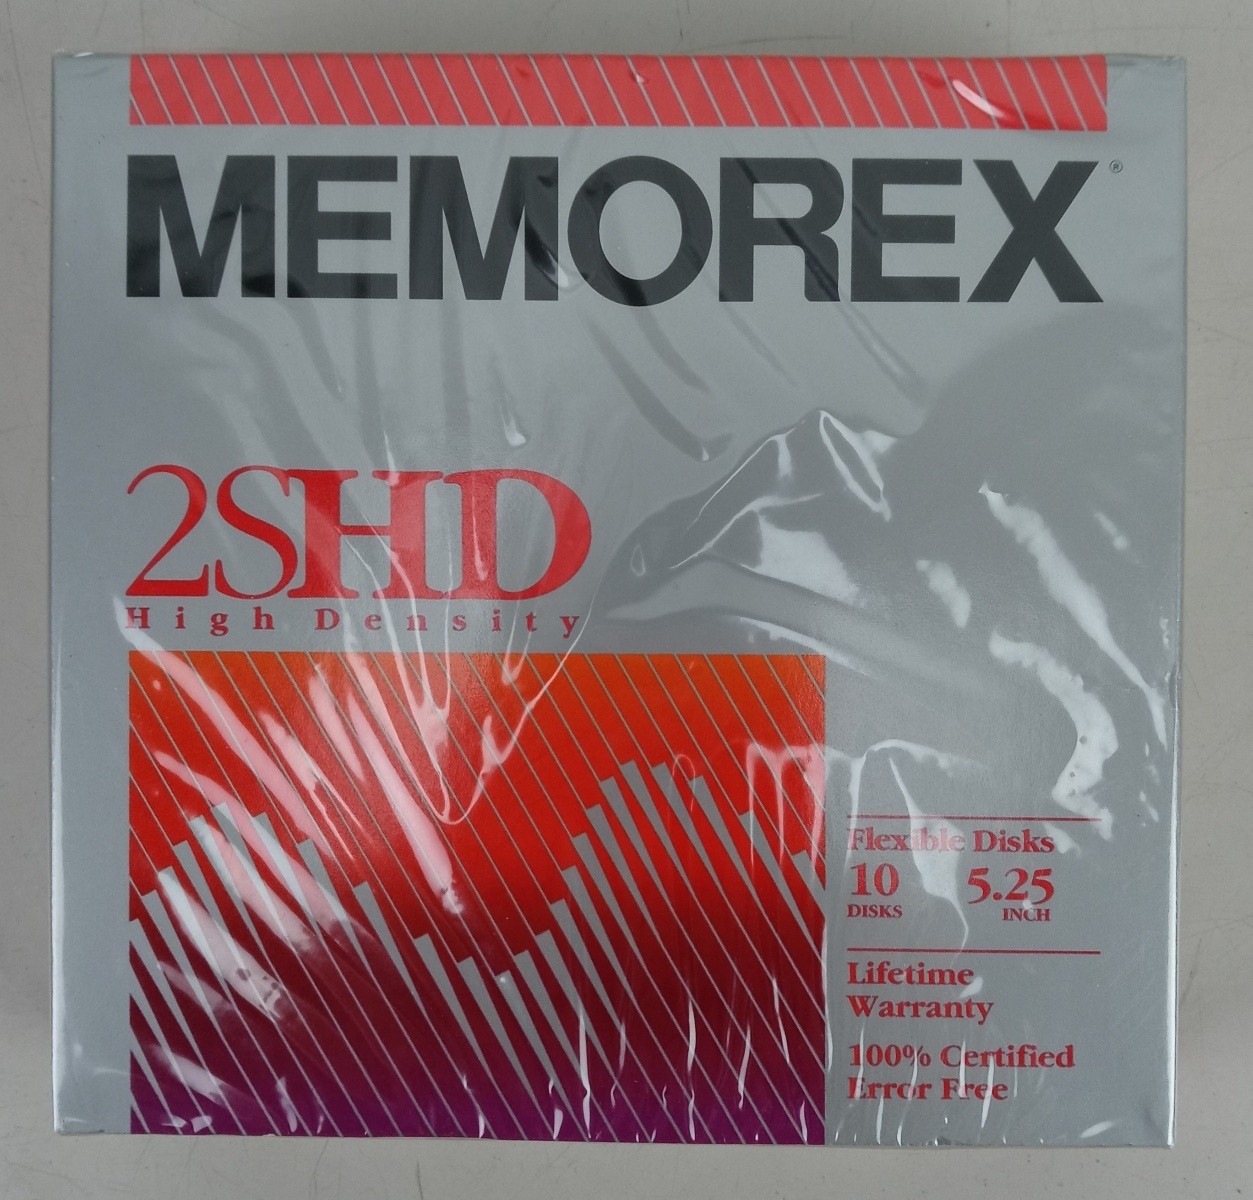 Memorex 2SHD 10 Count 5.25" Floppy Disk